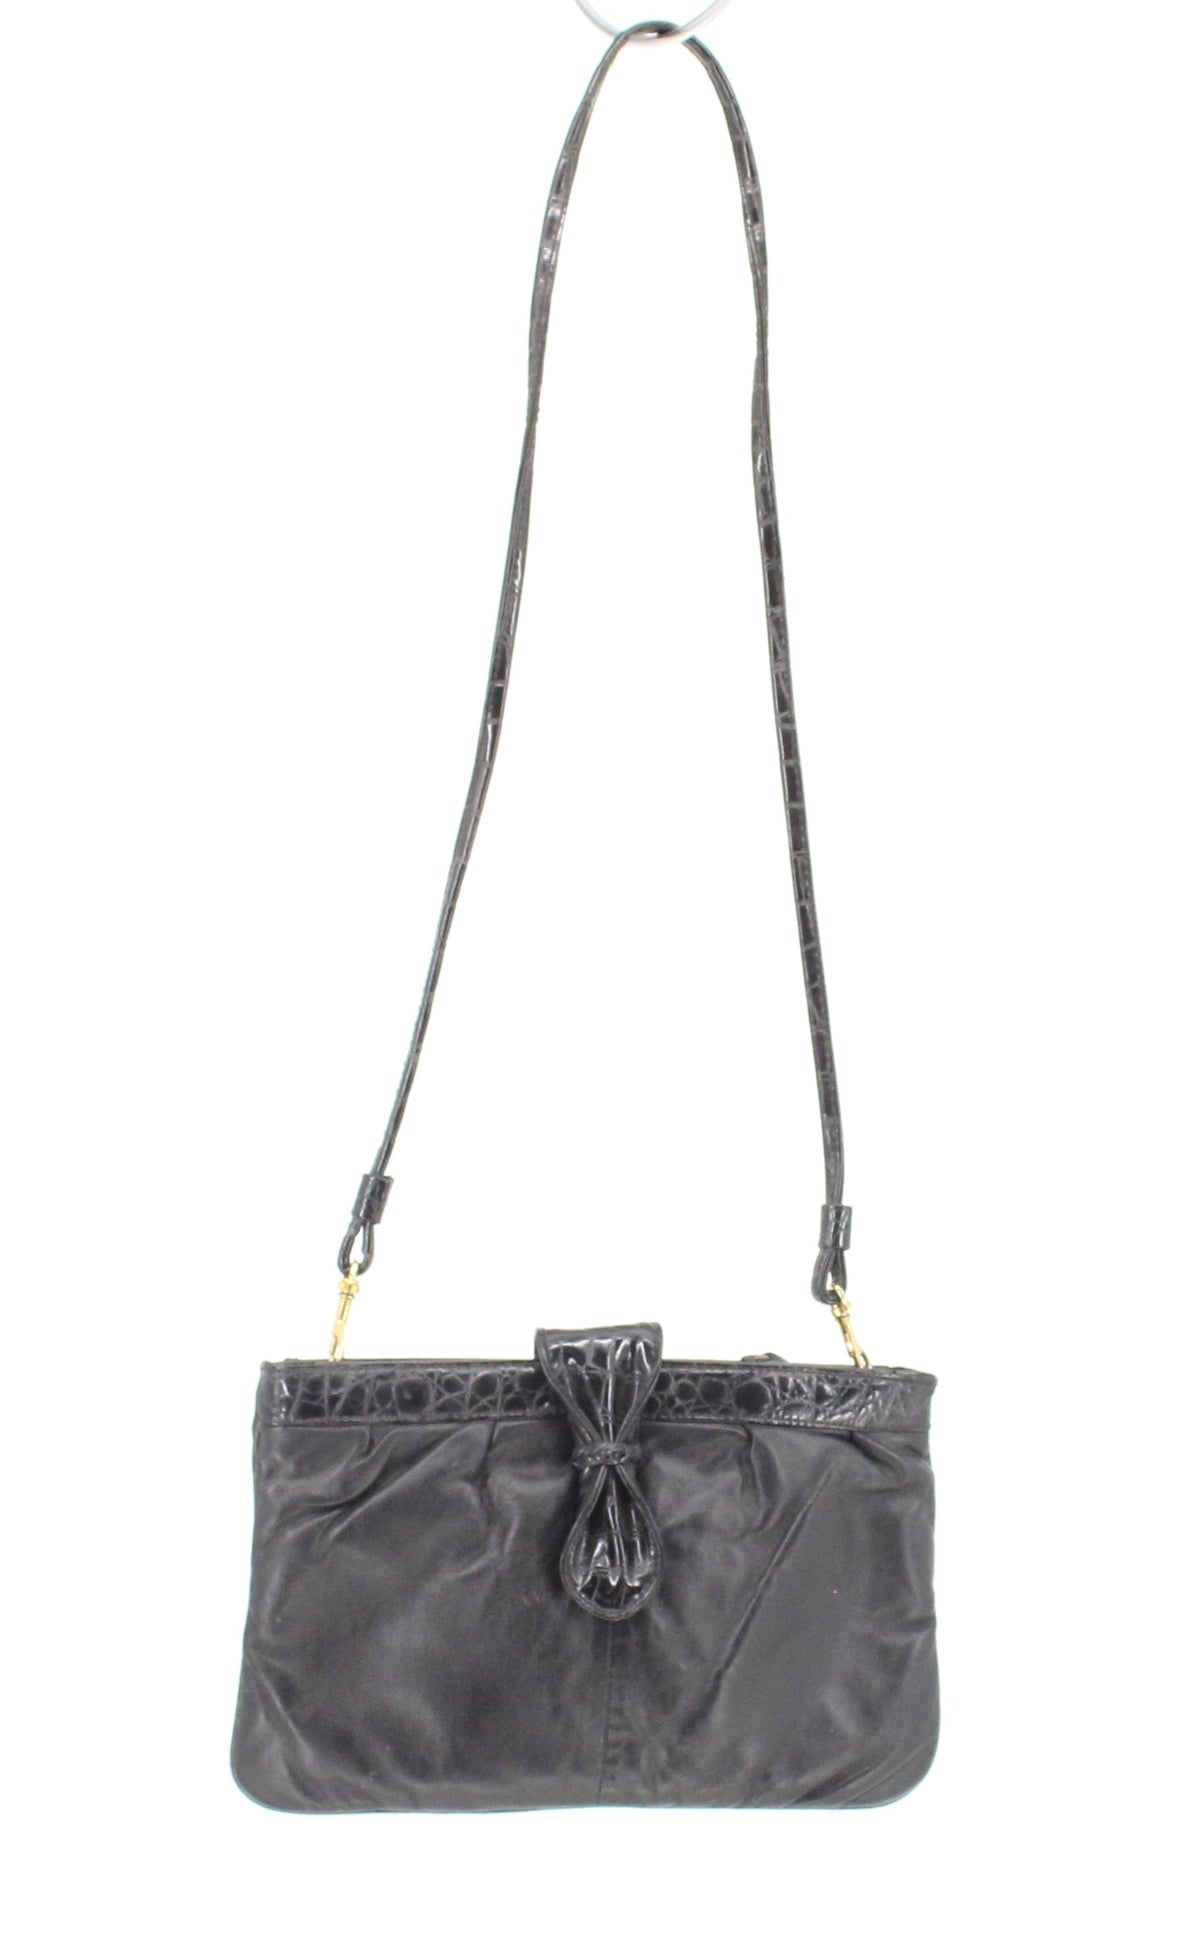 Black Vegan Leather Crossbody Snap Bag With Croco Details